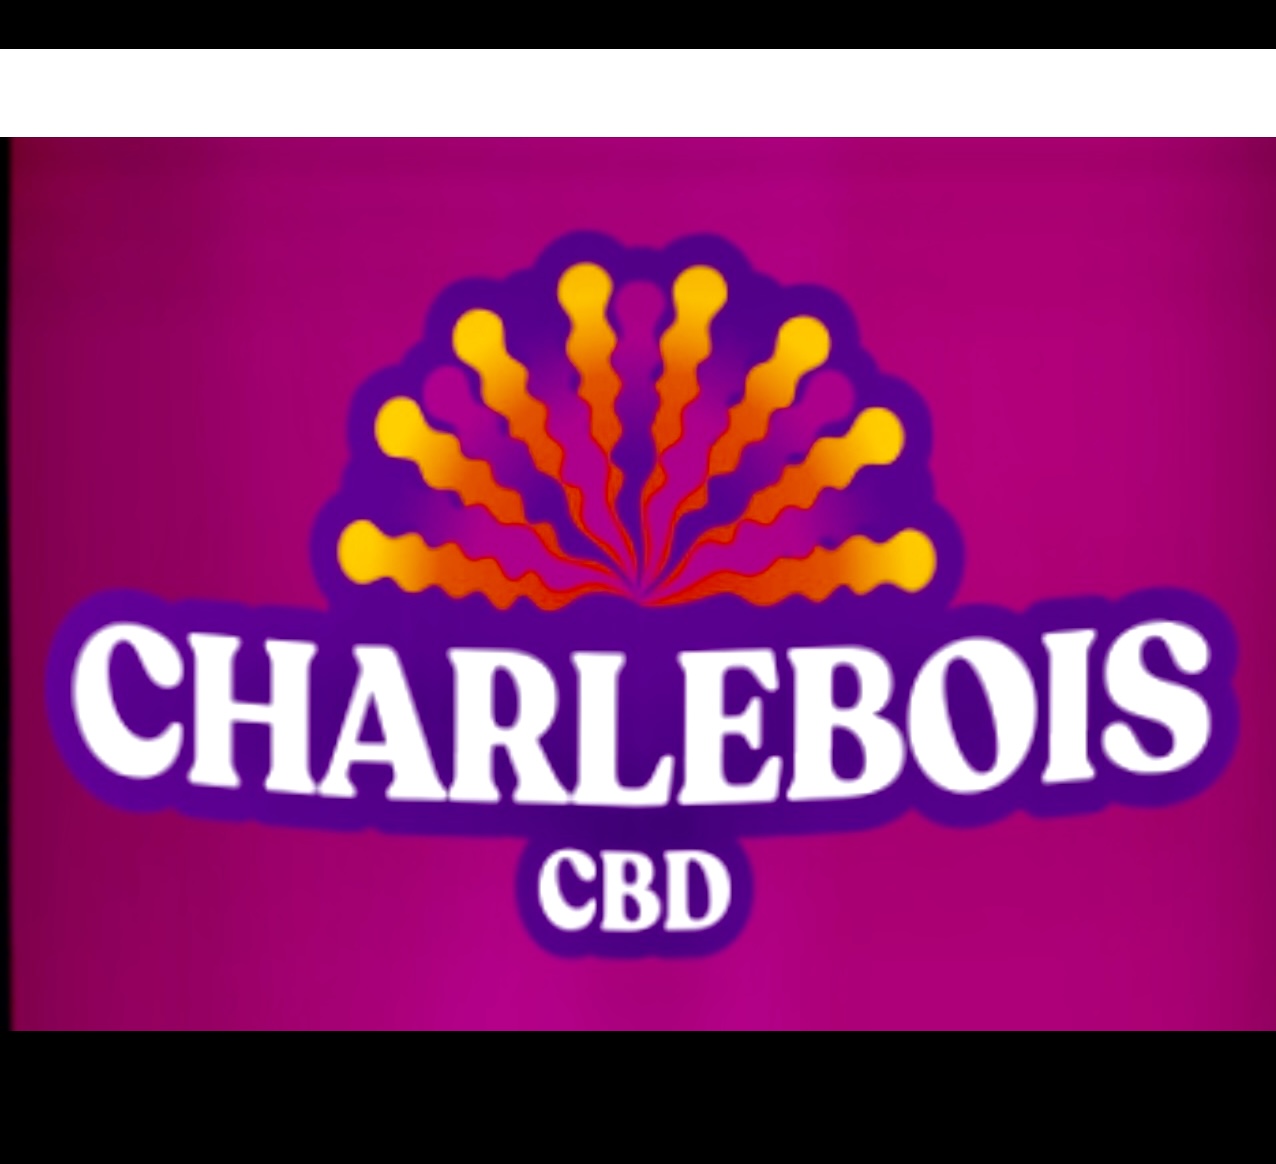 Logo CBD de Charlebois sur fond violet.